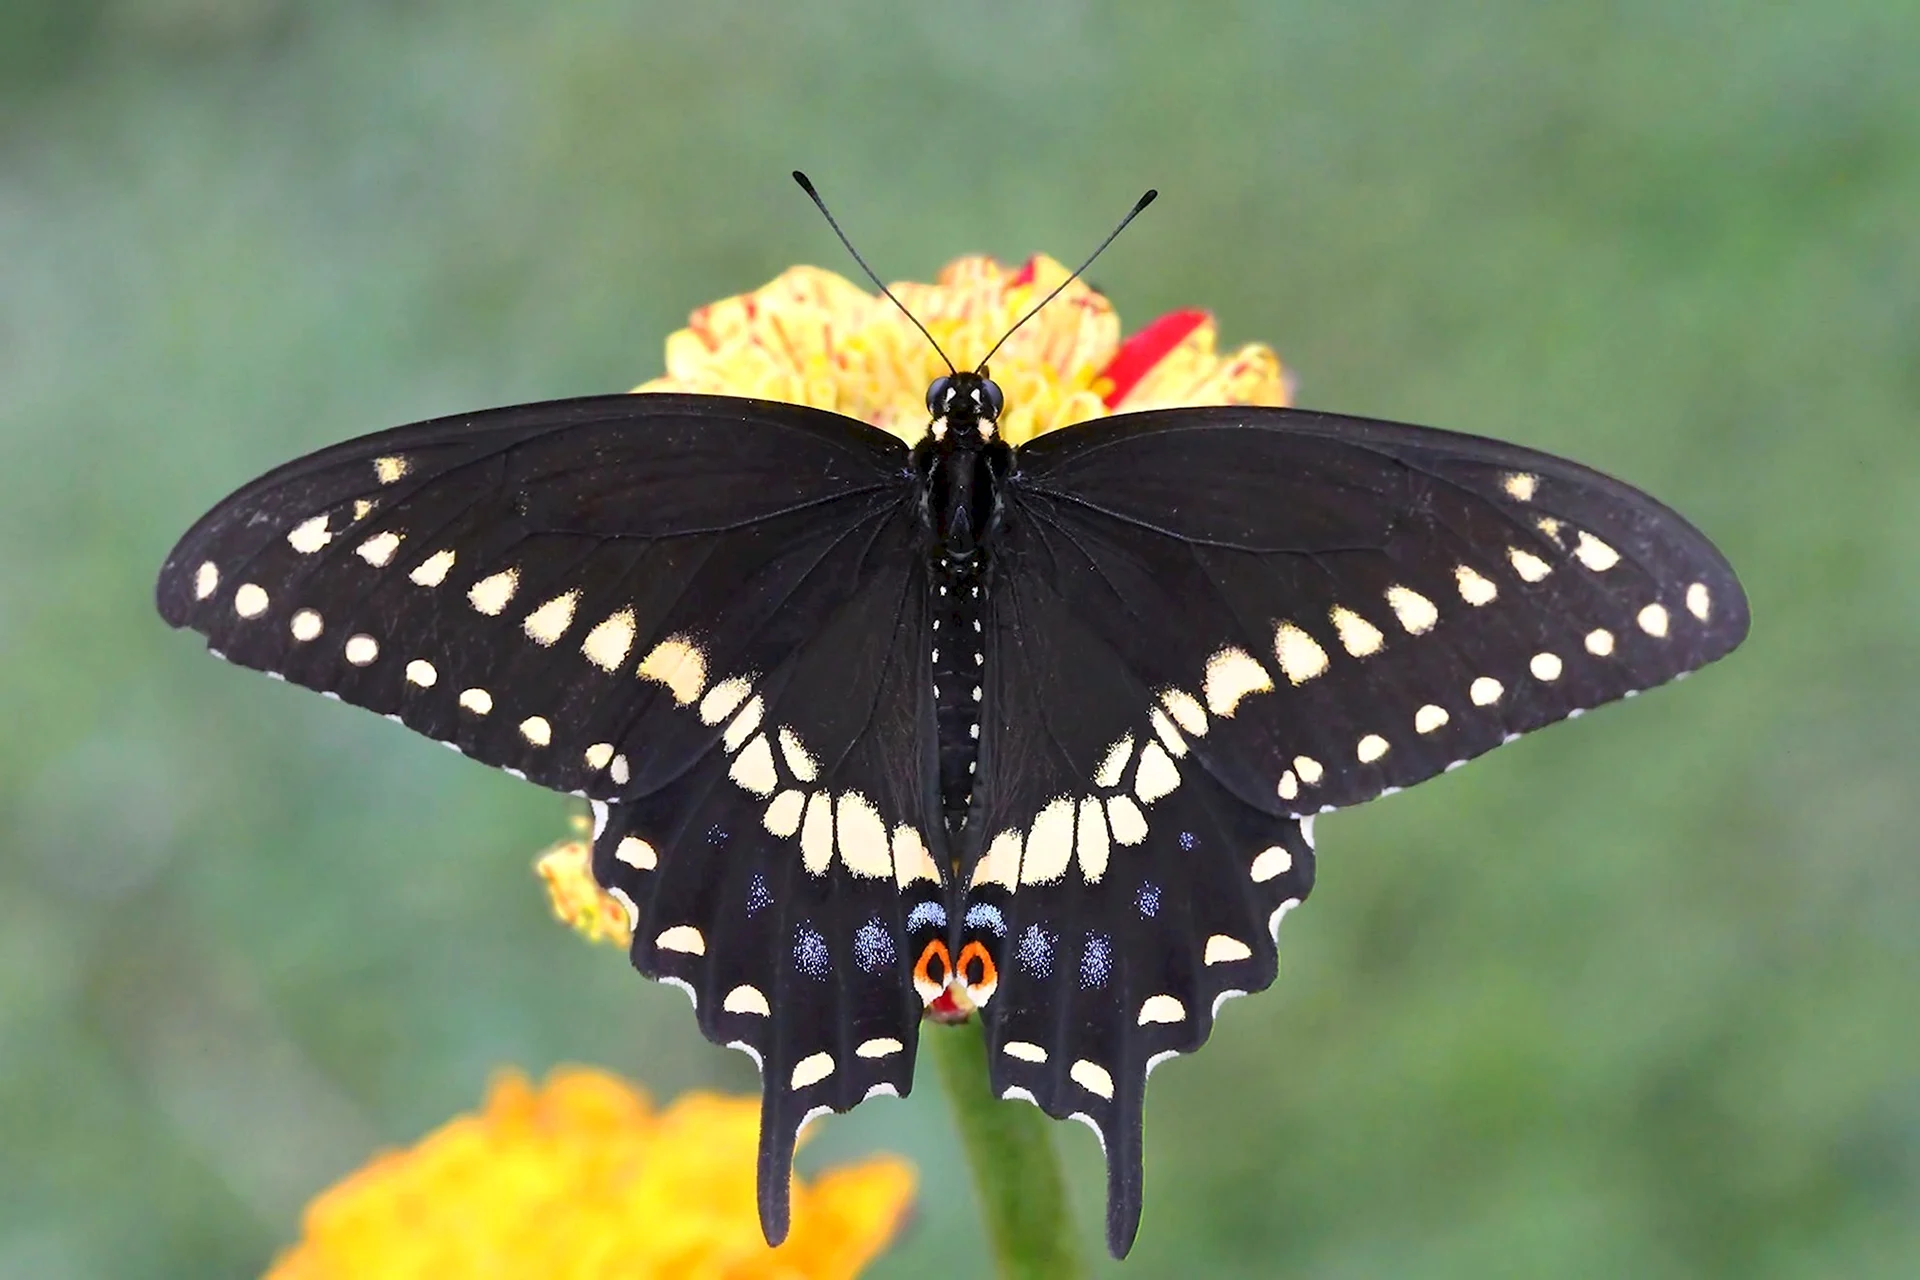 Papilio Polyxenes